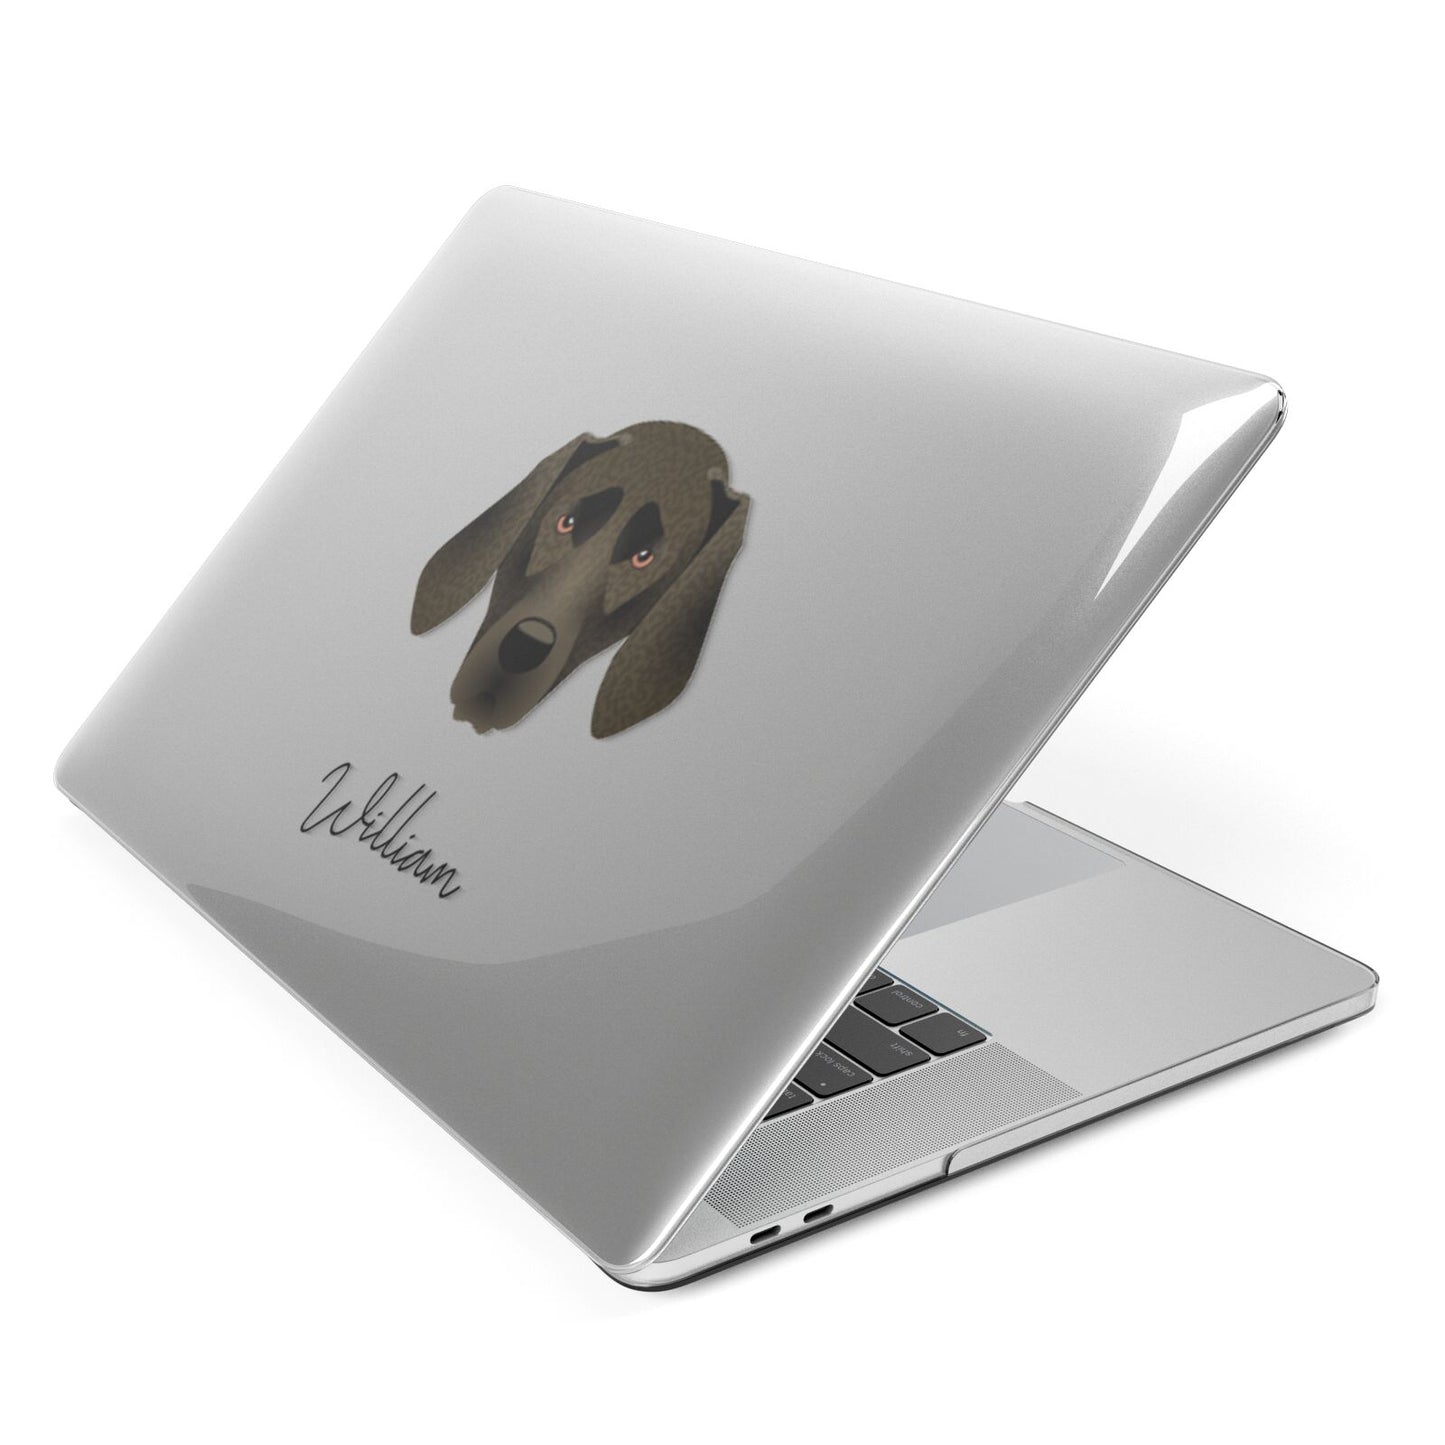 Plott Hound Personalised Apple MacBook Case Side View